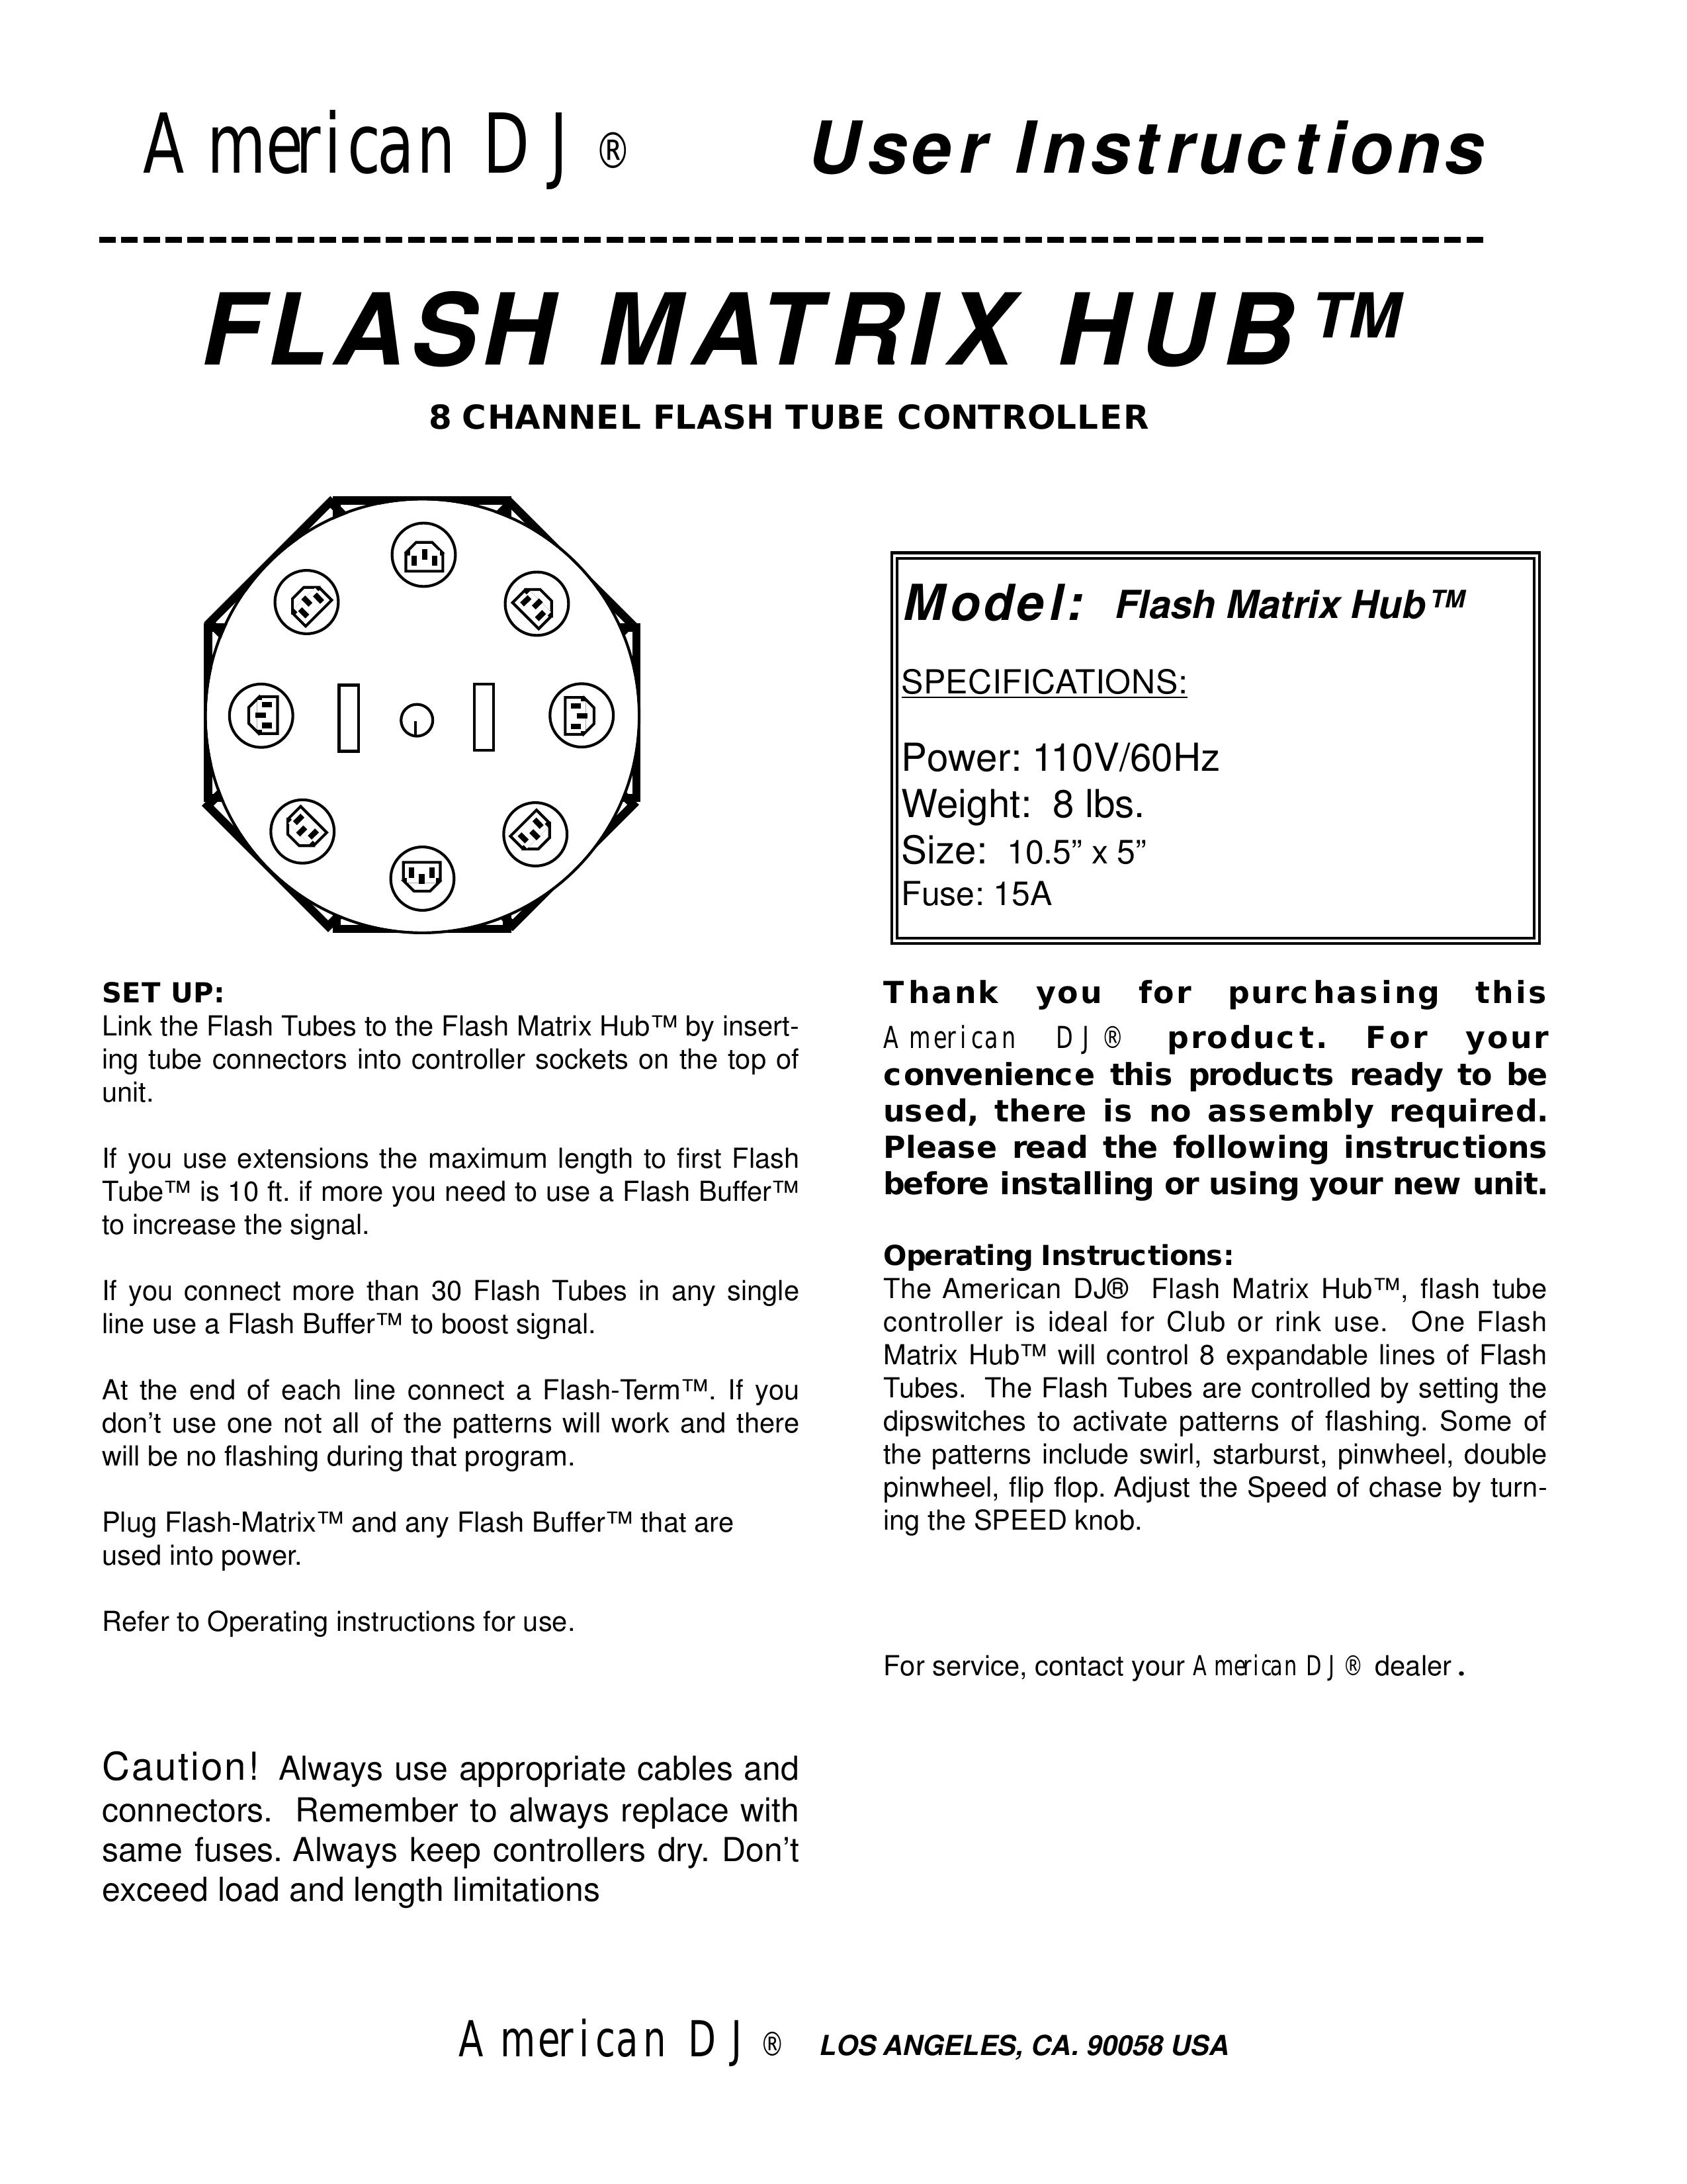 American DJ Flash Matrix Hub DJ Equipment User Manual (Page 1)